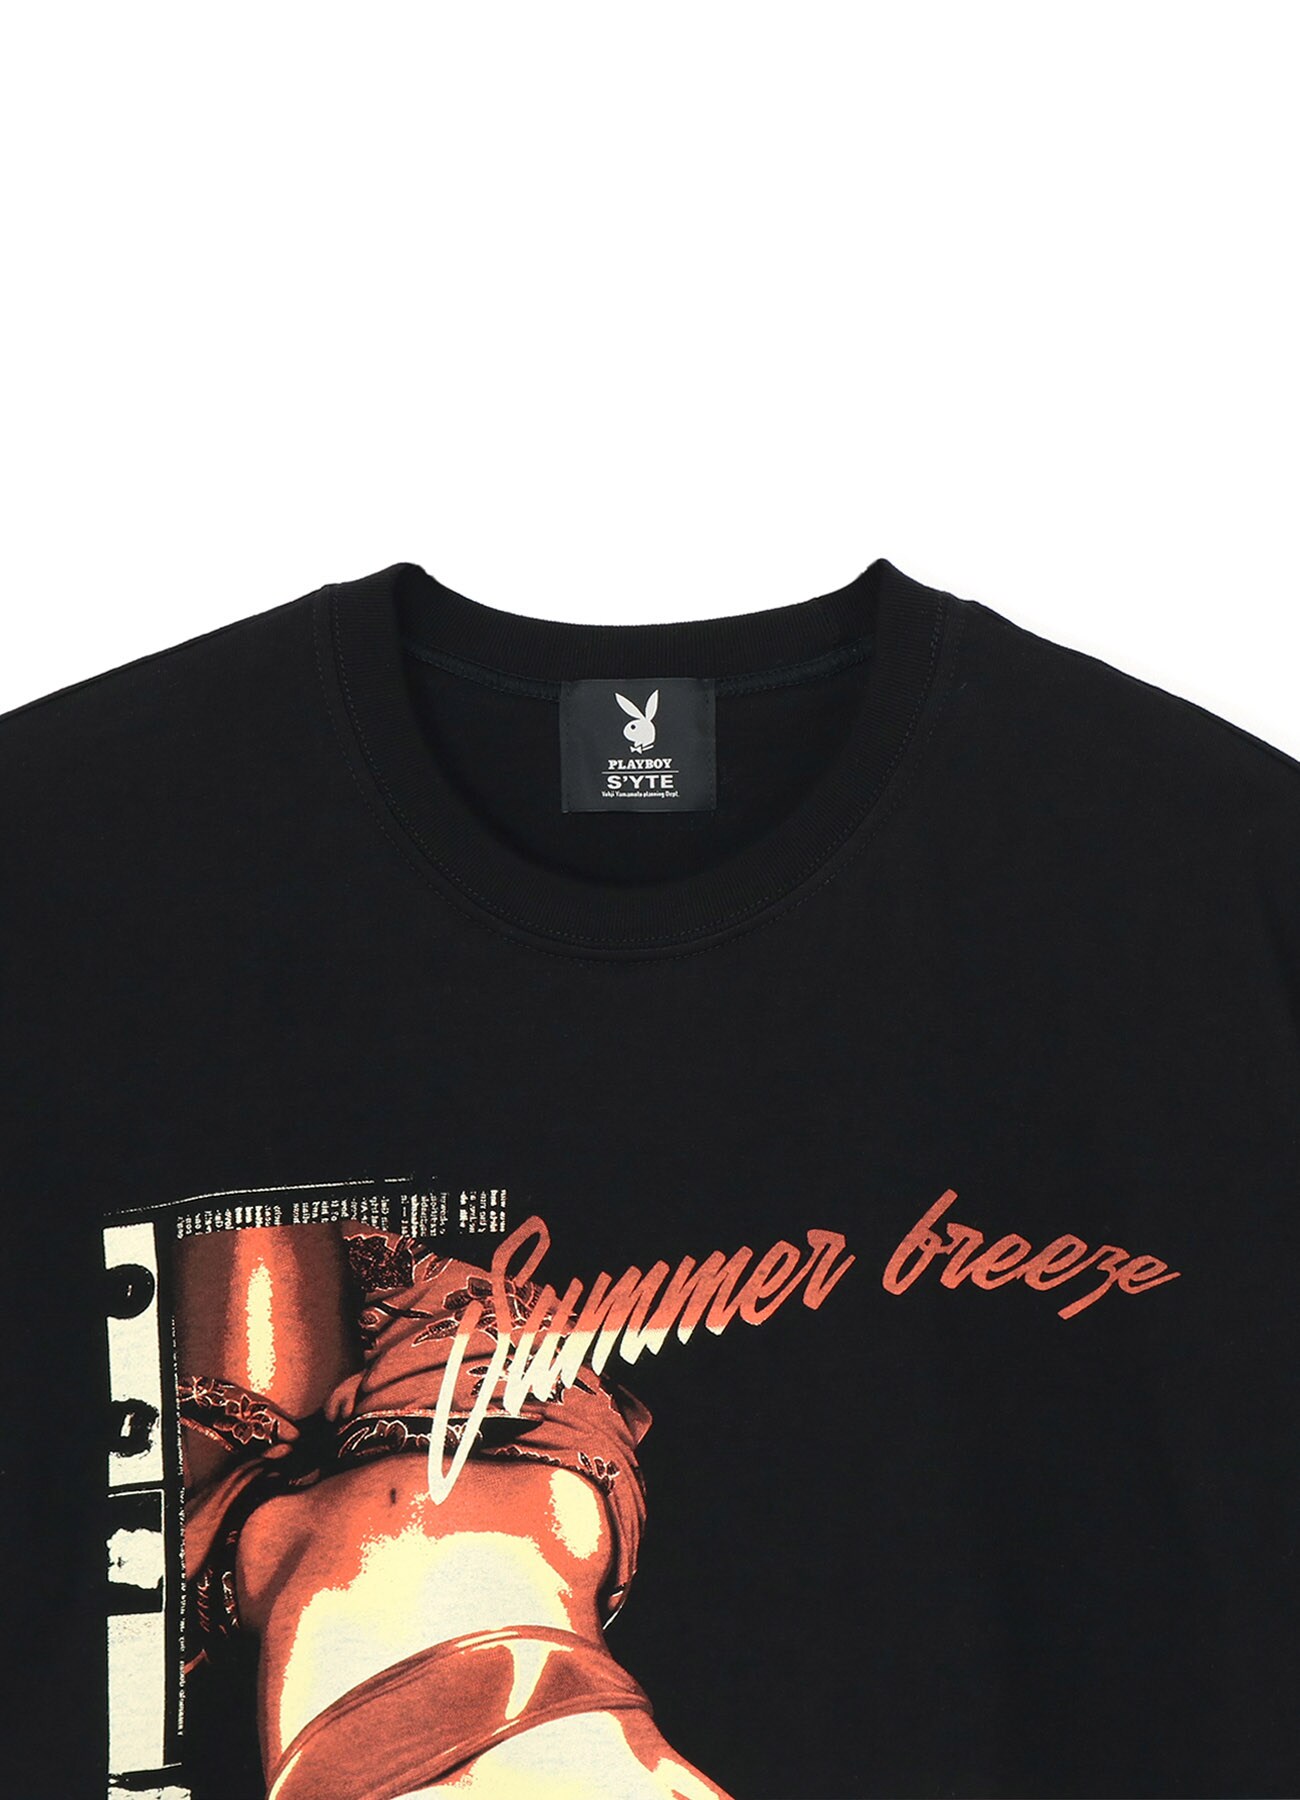 PLAYBOY×S’YTE feat Harumi Yamaguchi Summer Breeze T-shirt